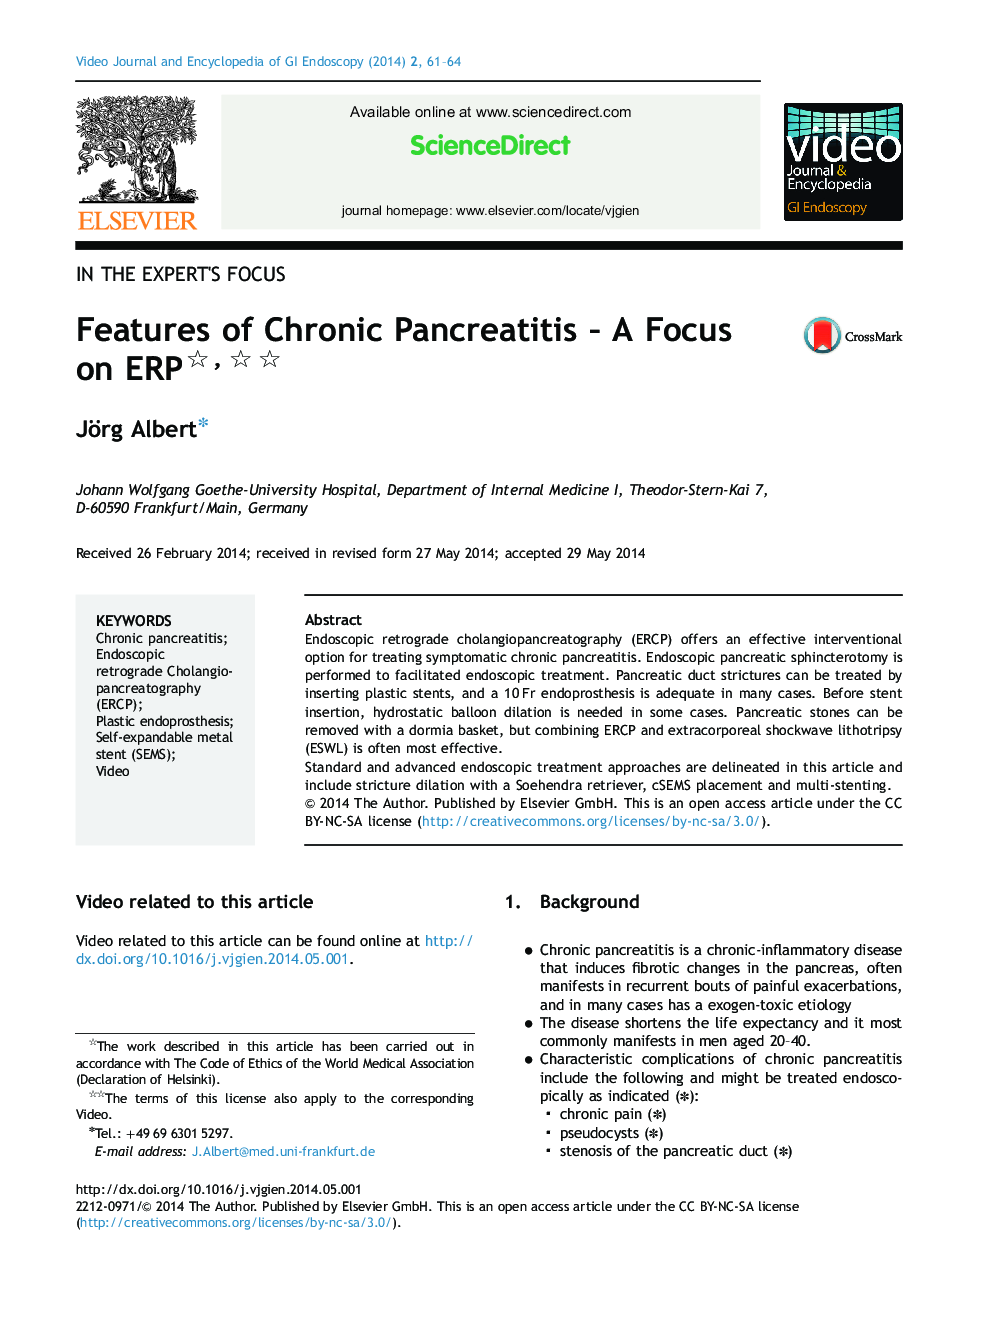 Features of Chronic Pancreatitis – A Focus on ERP 